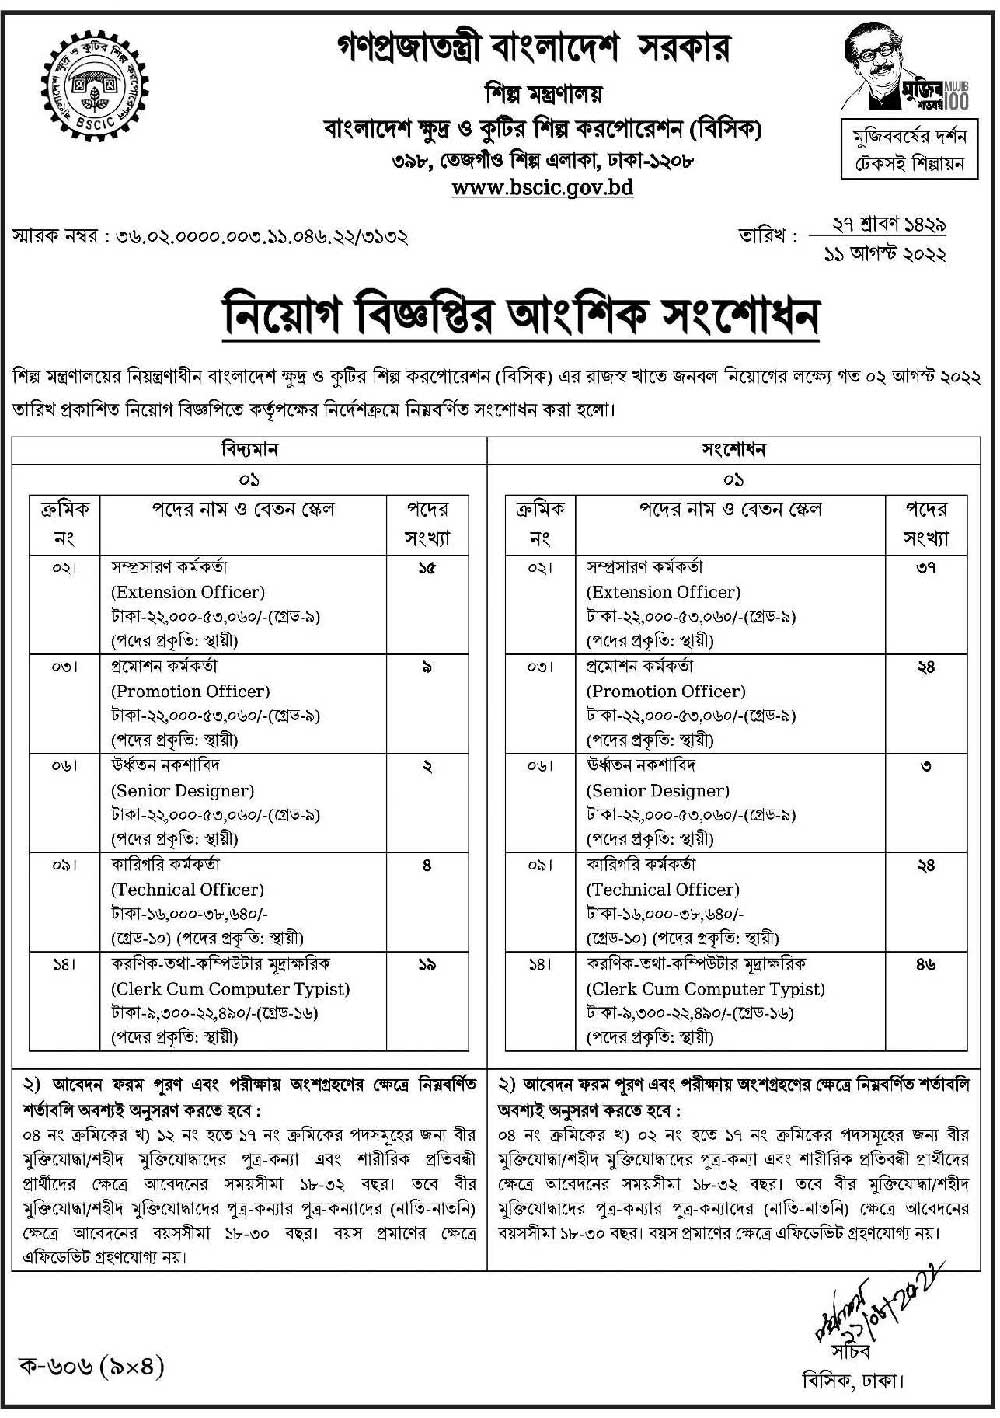 Bangladesh Small Cottage Industries Corporation Job Circular 2022